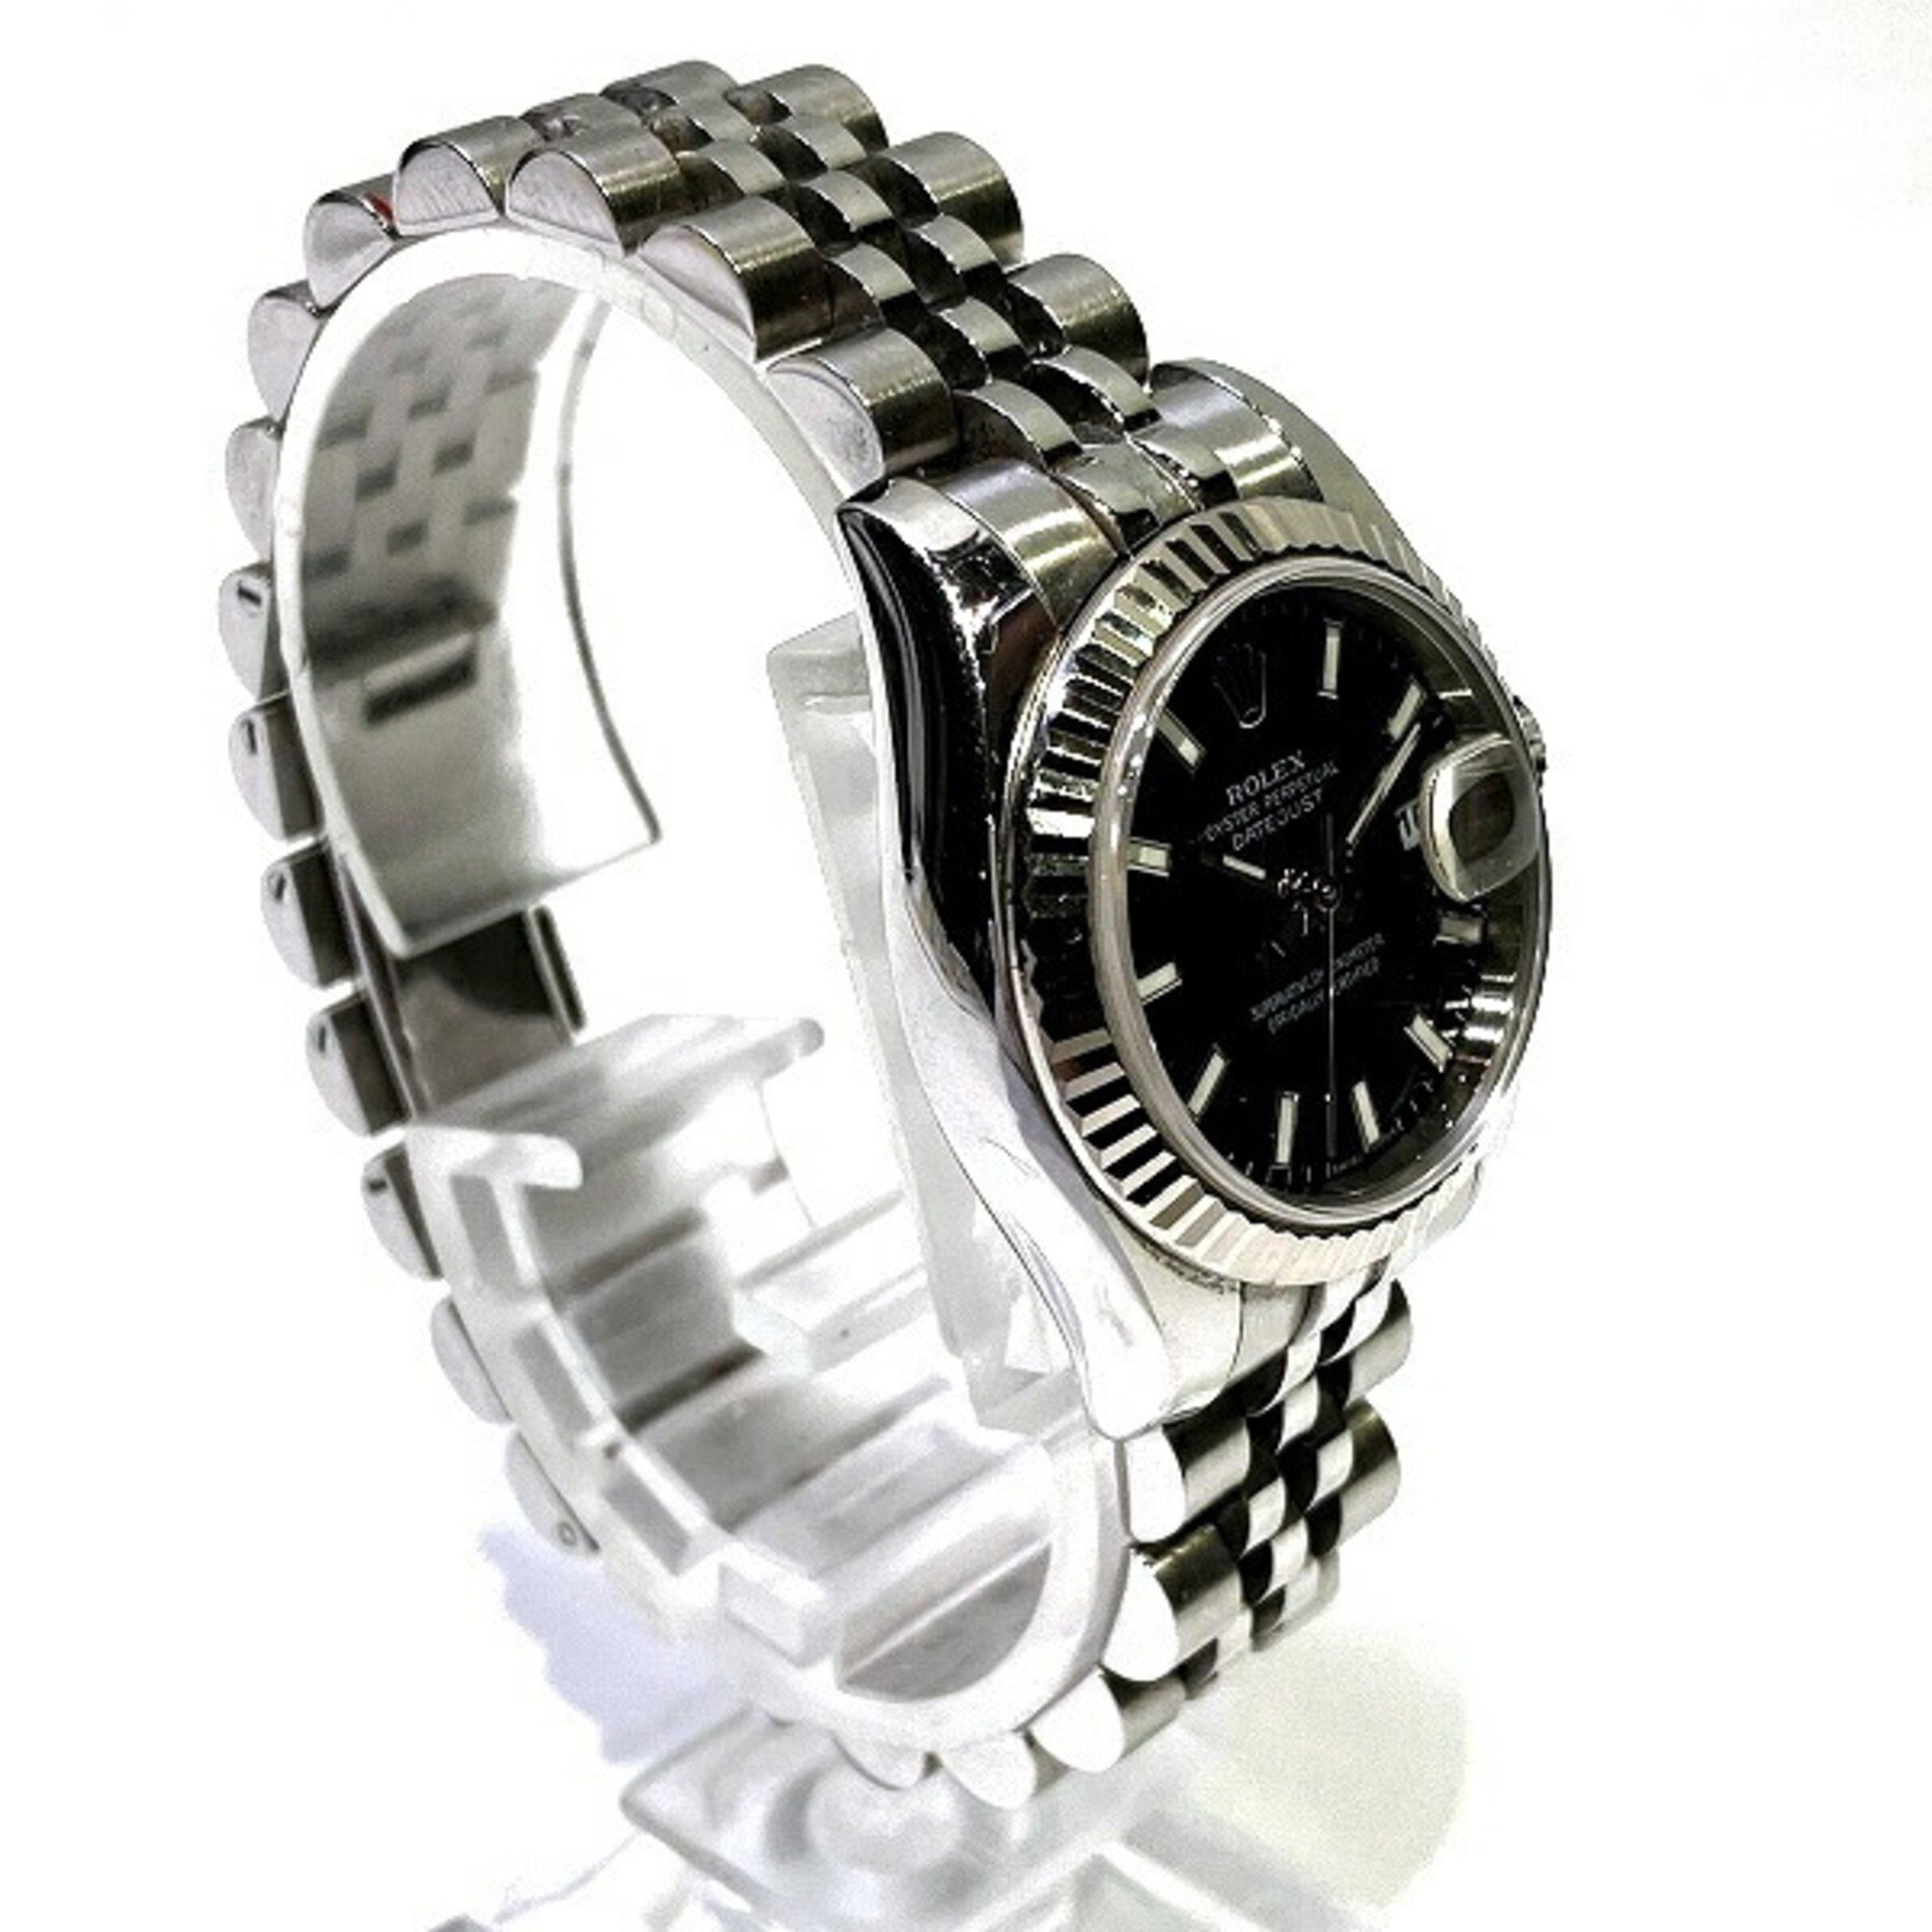 Rolex Datejust 179174 Automatic D number watch ladies